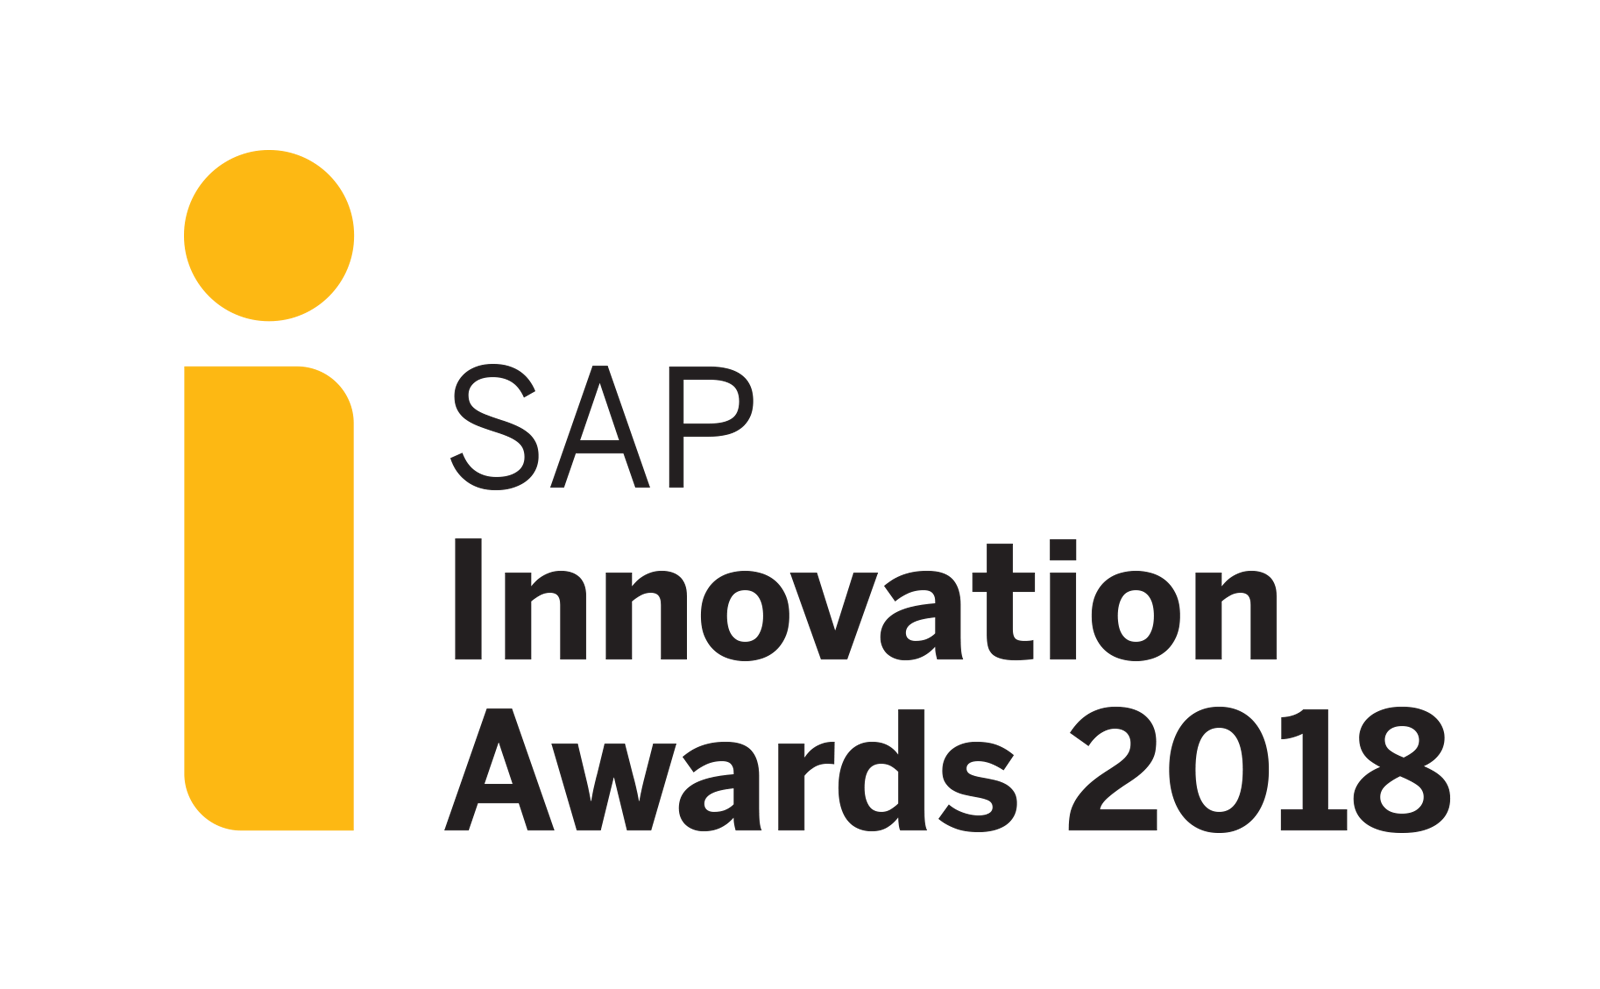 SAP innovation awards 2018